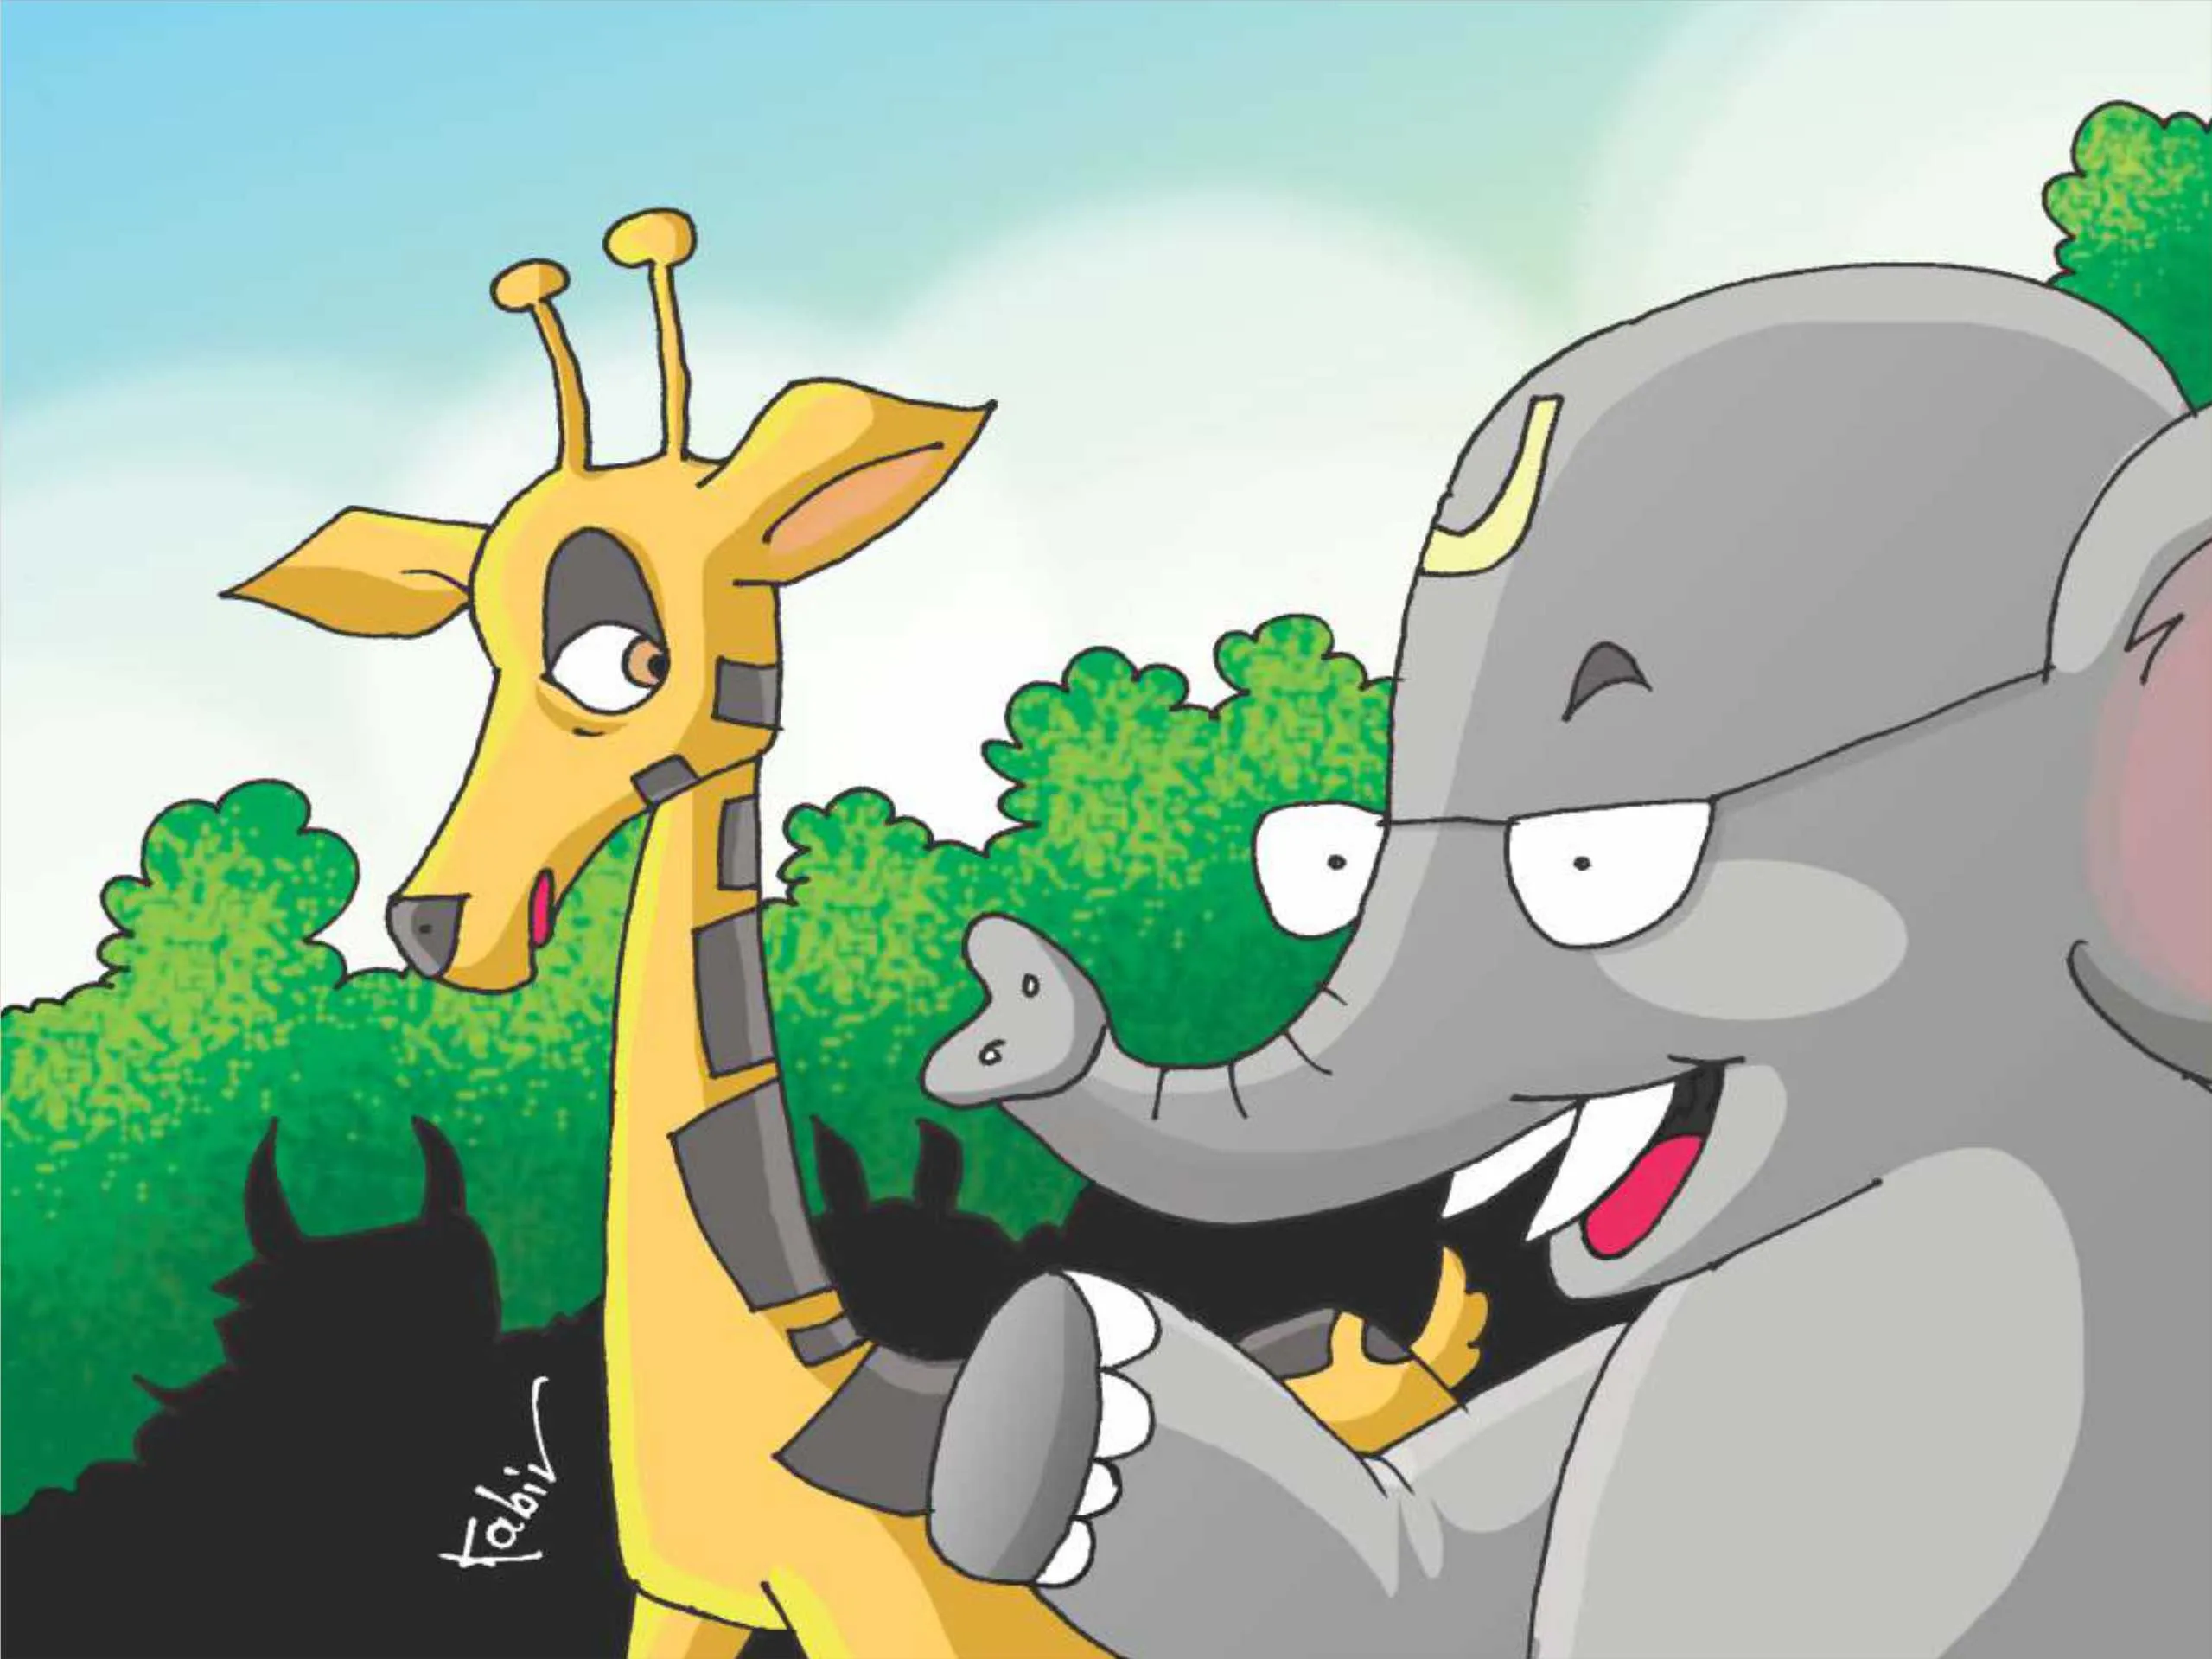 Giraffe and elephant cartoon image